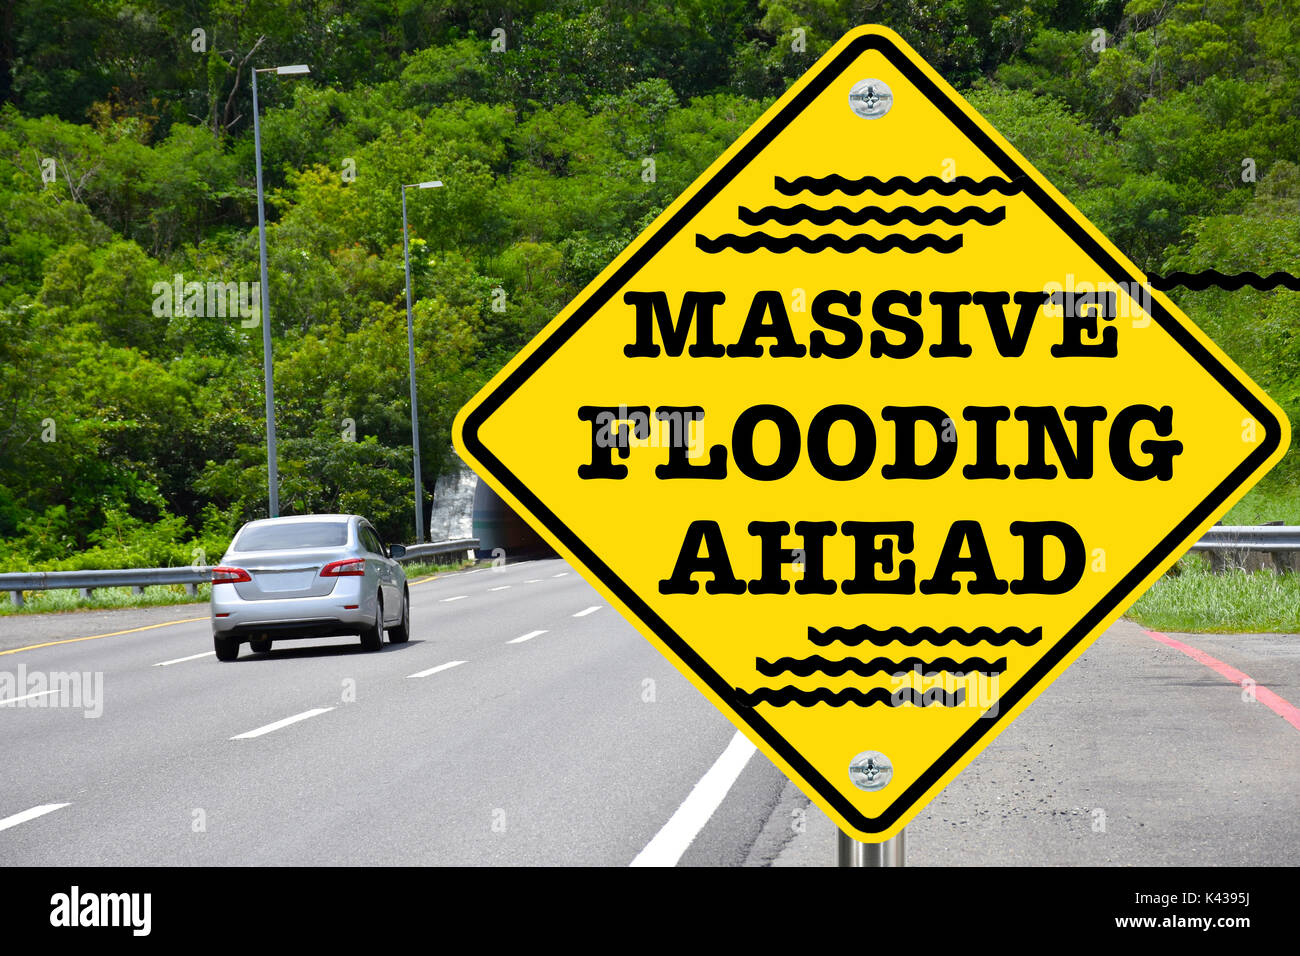 Massive Flooding Ahead yellow warning street sign Stock Photo